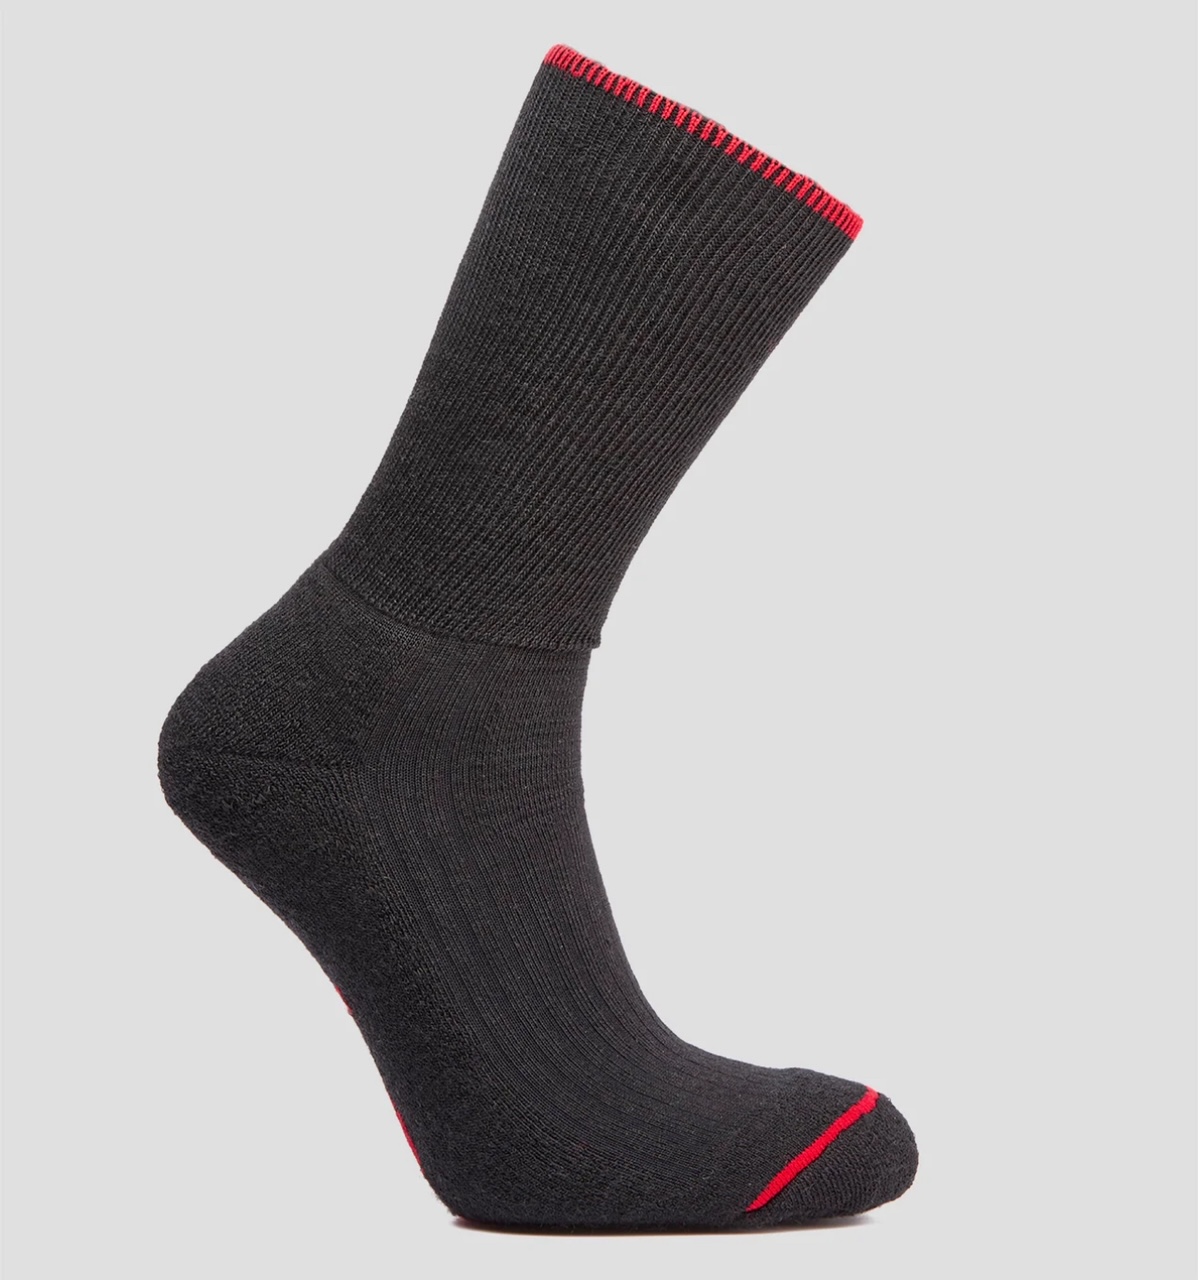 LOC Merino Sock - Thin - Size EU 37-39